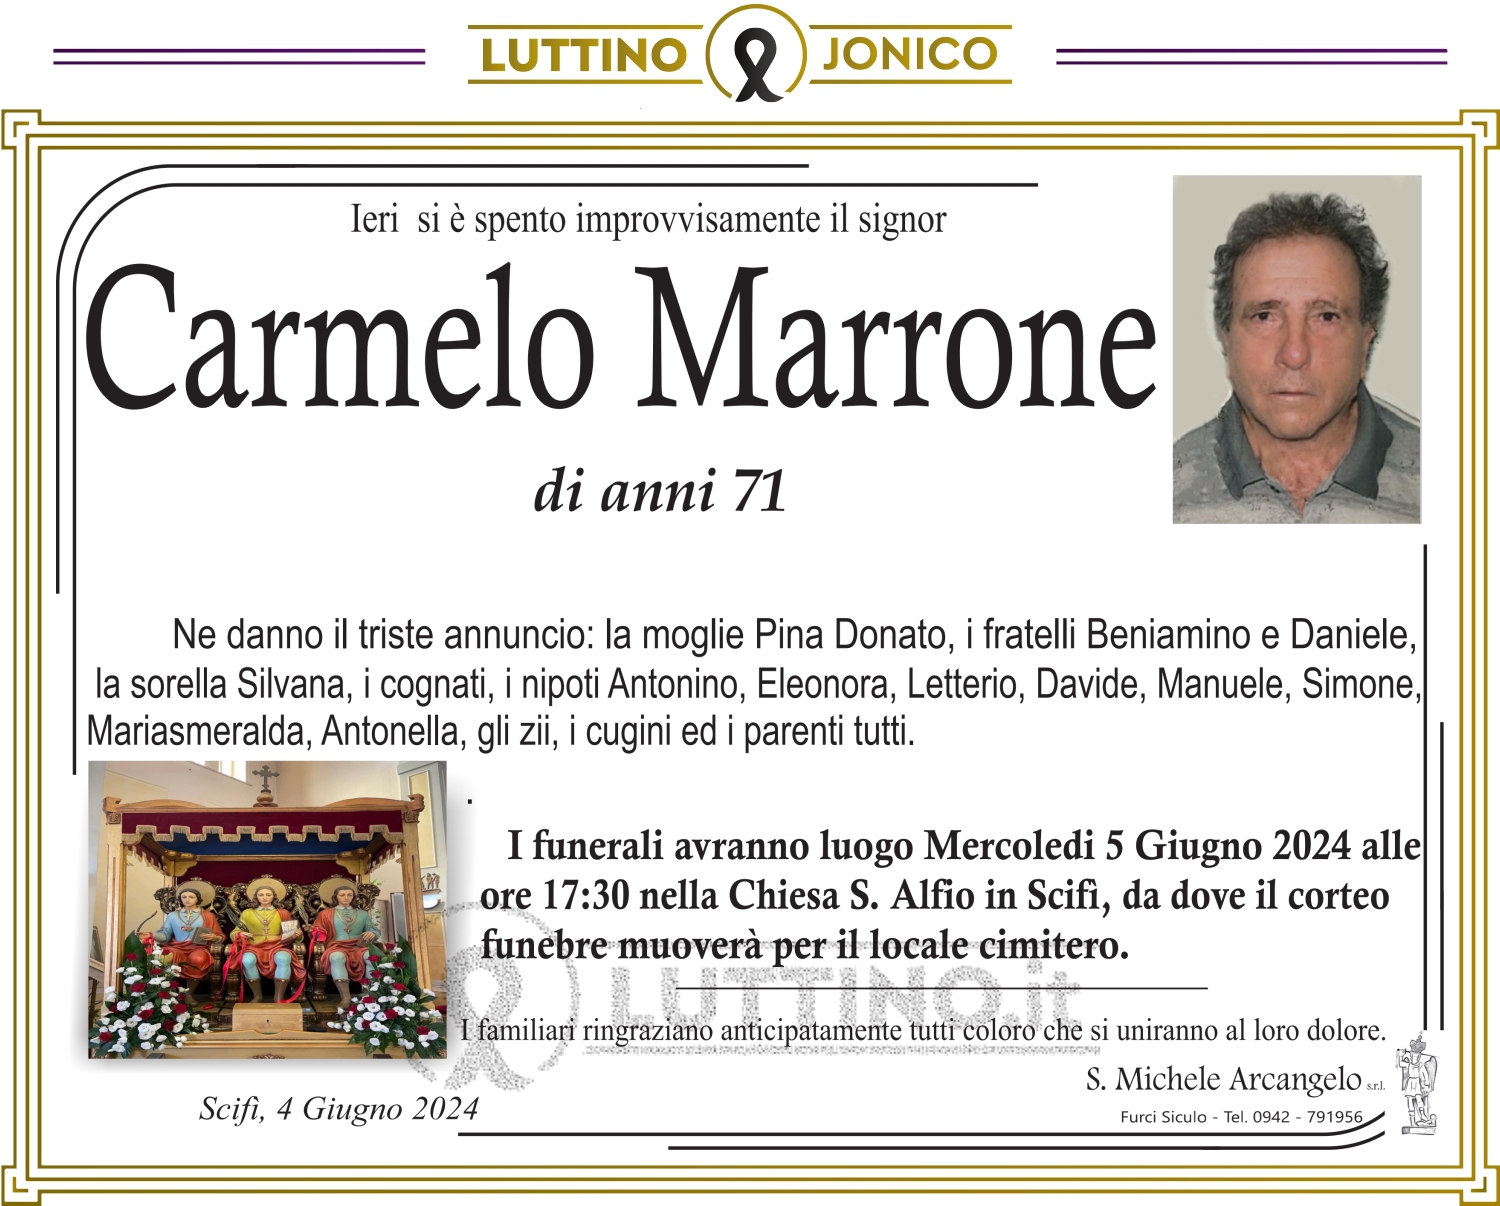 Carmelo Marrone